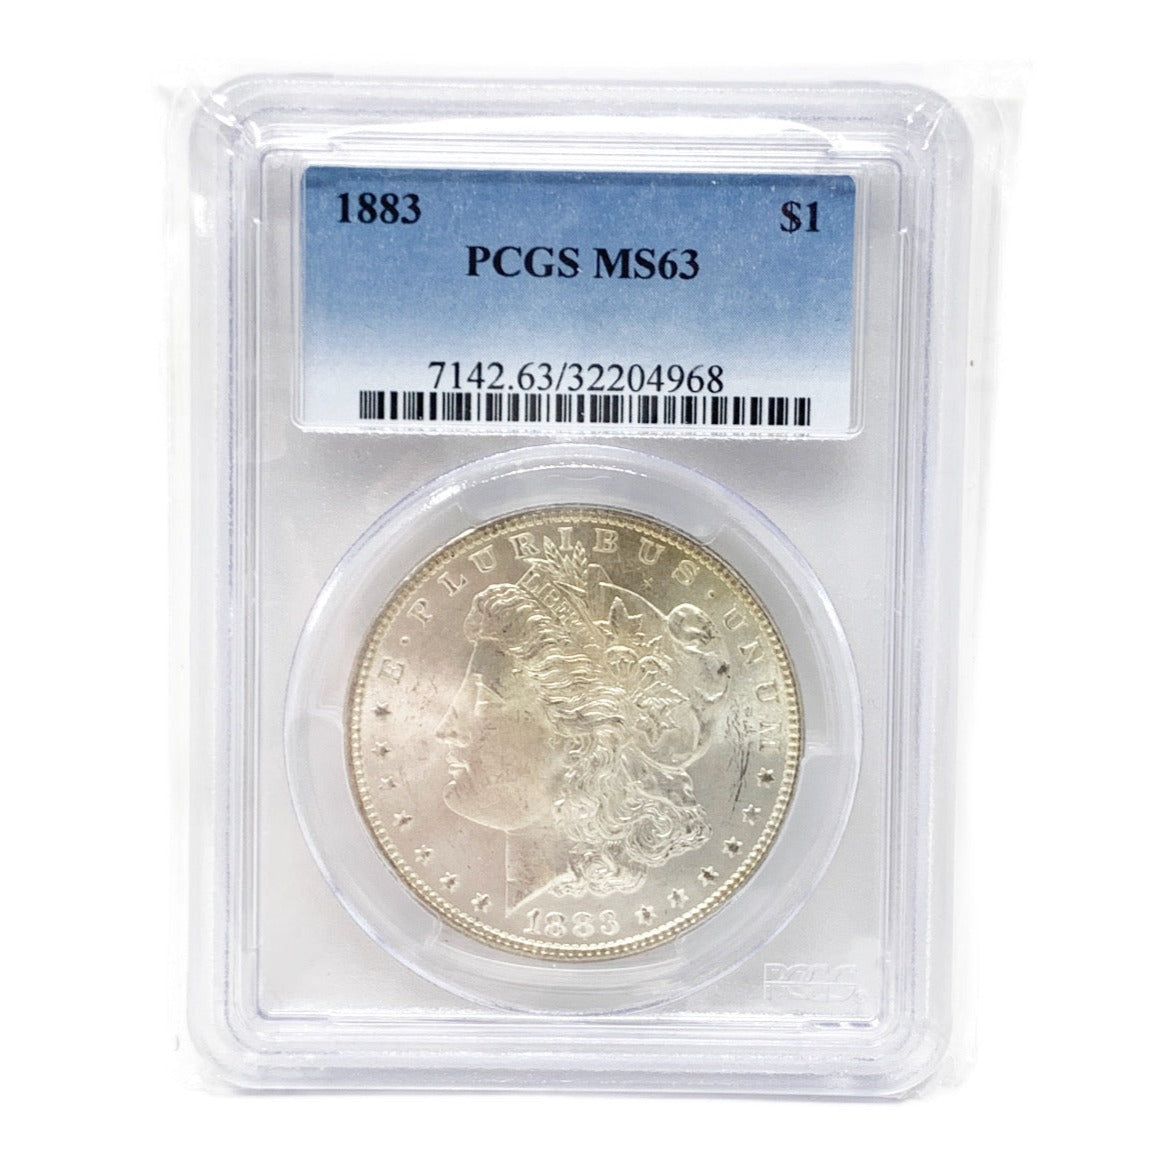 1883 PCGS MS63 Morgan Dollar